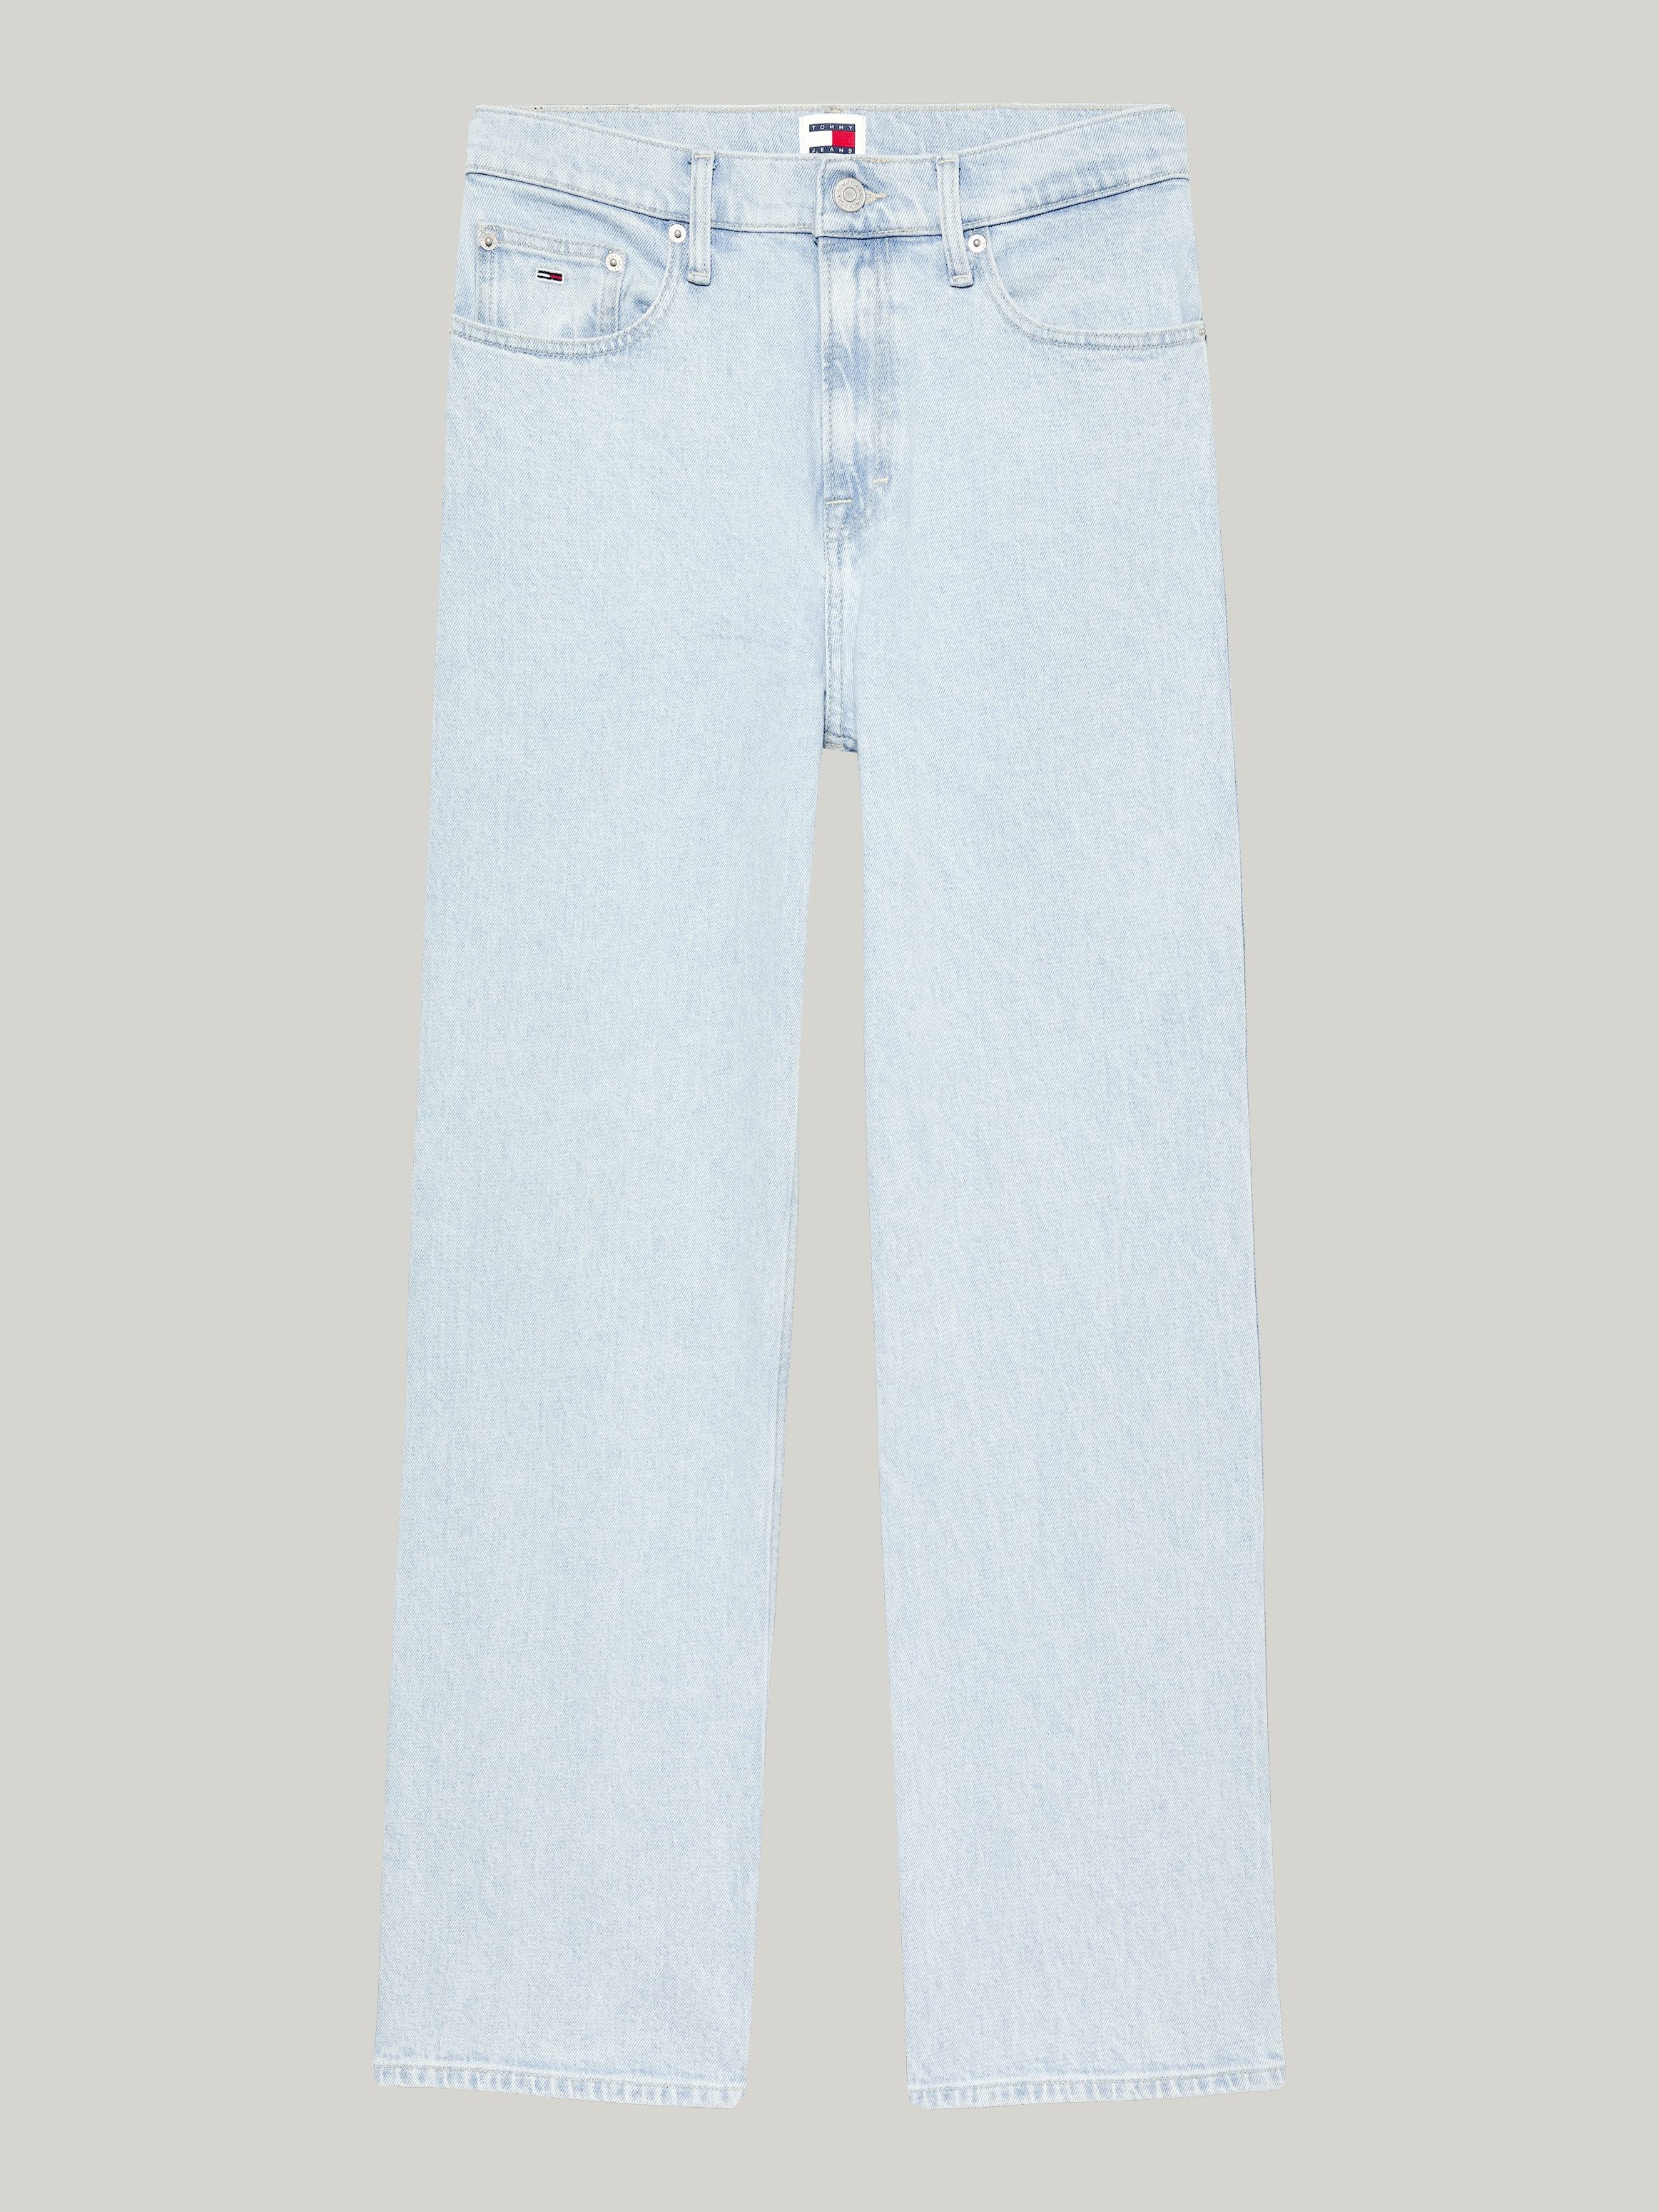 TOMMY JEANS Wijde jeans BETSY MD LS CG4136 in five-pocketsstijl